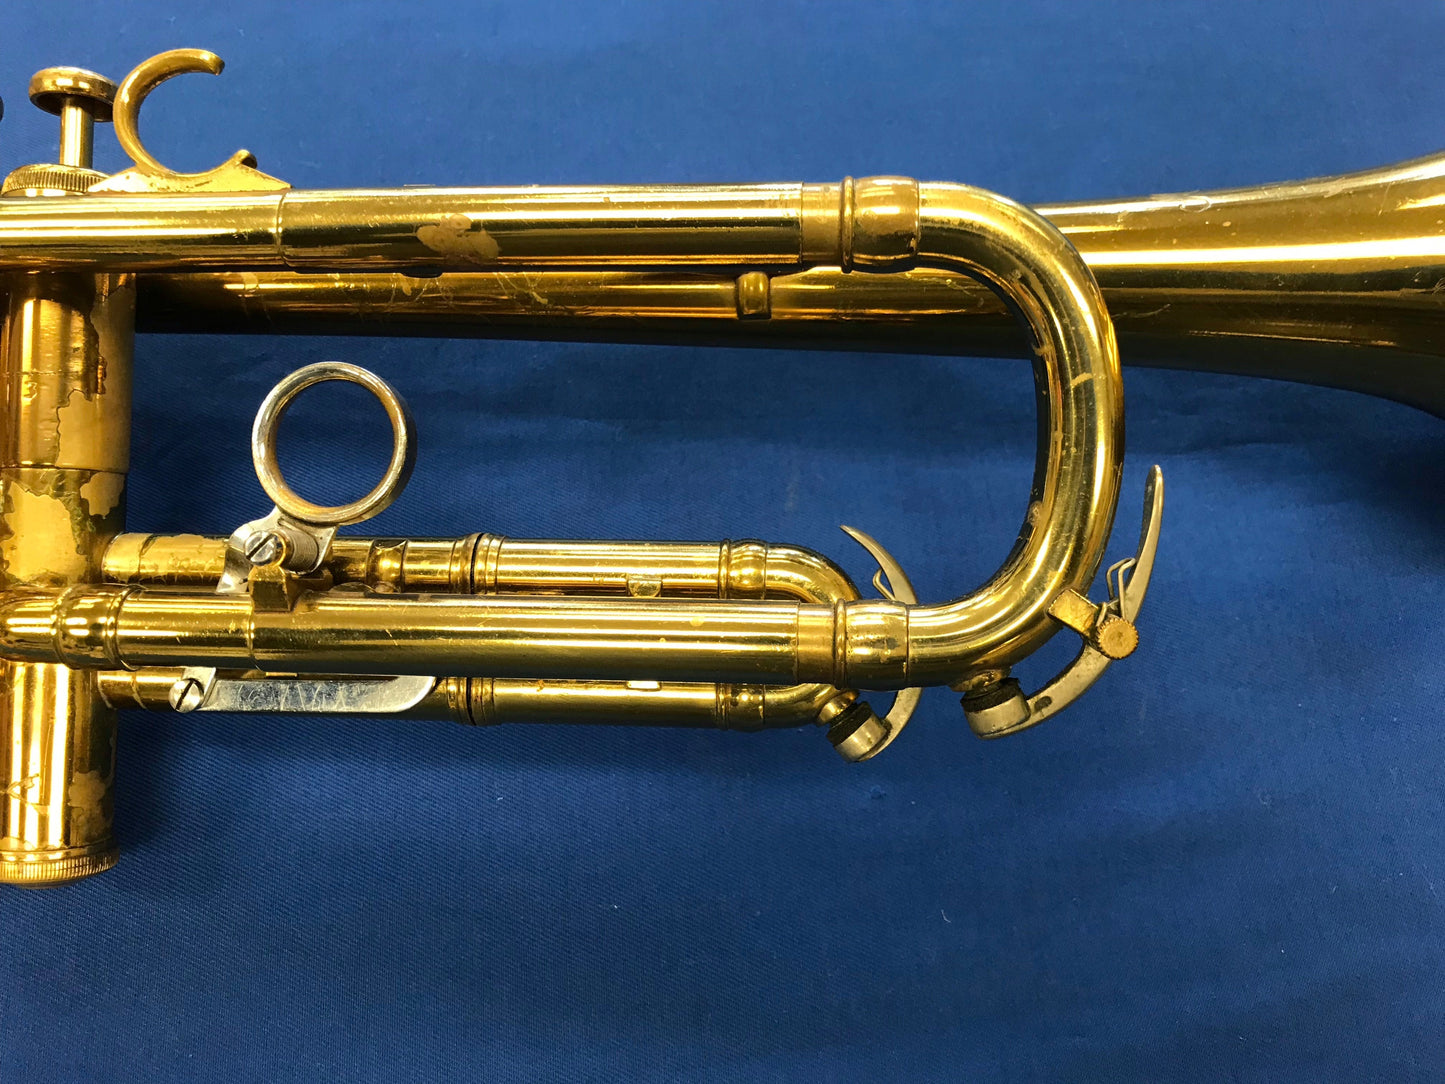 Pre-Owned Olds Mendez Trumpet